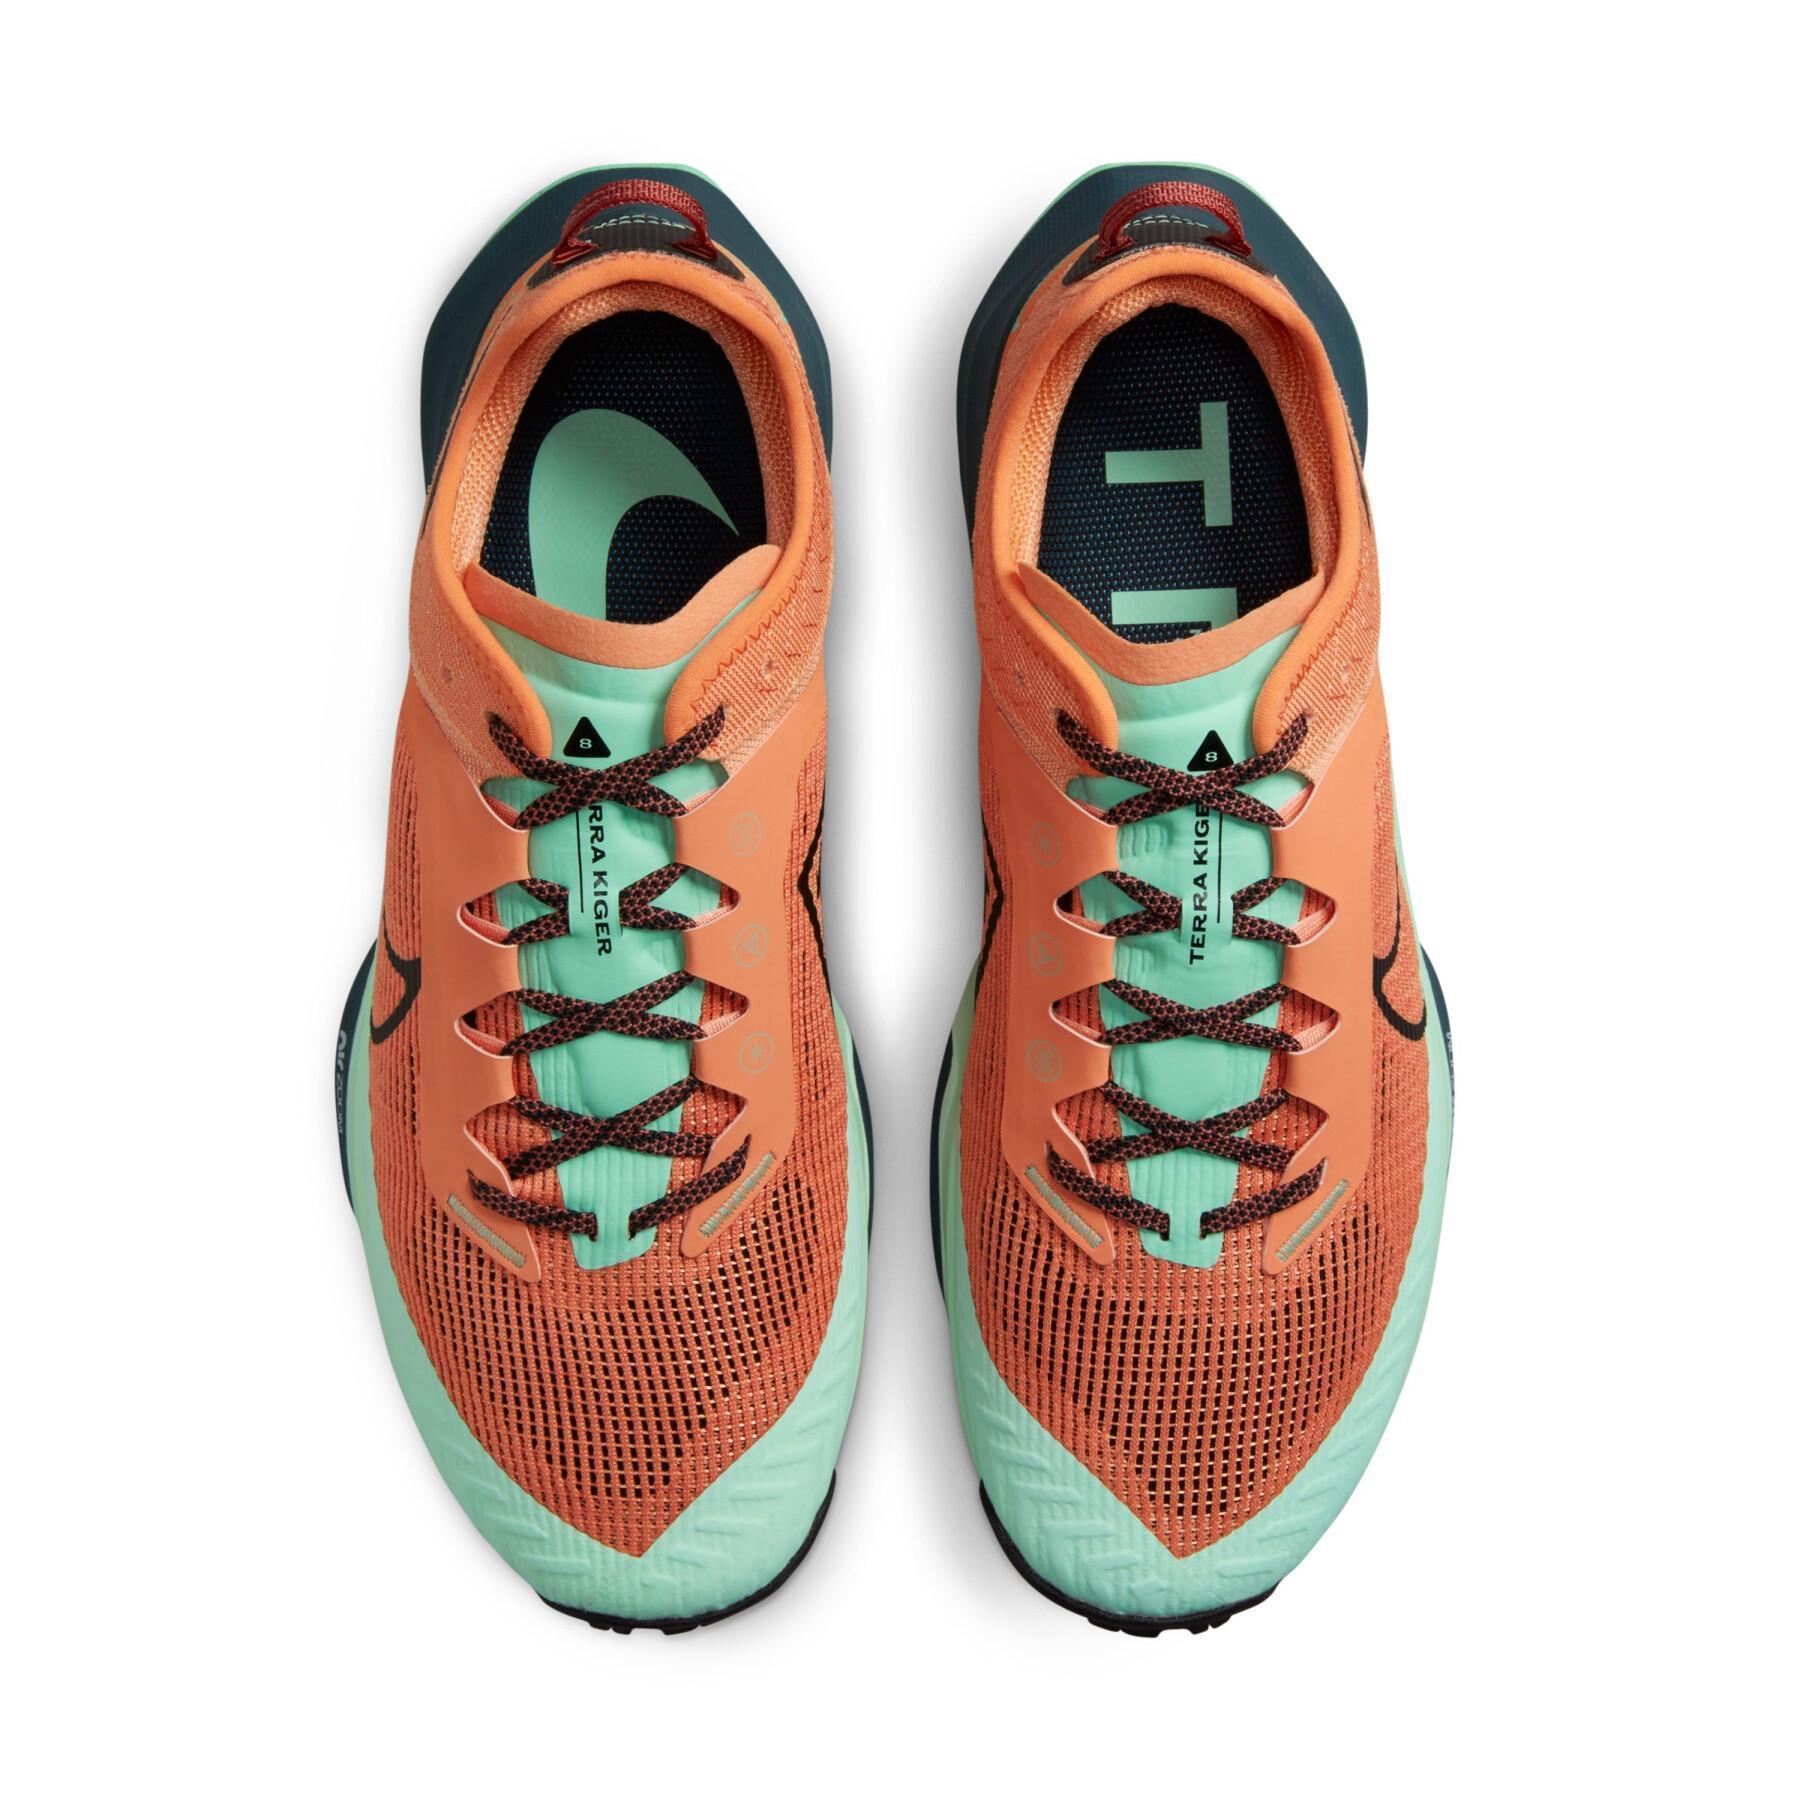 Chaussures de running Nike Air Zoom Terra Kiger 8